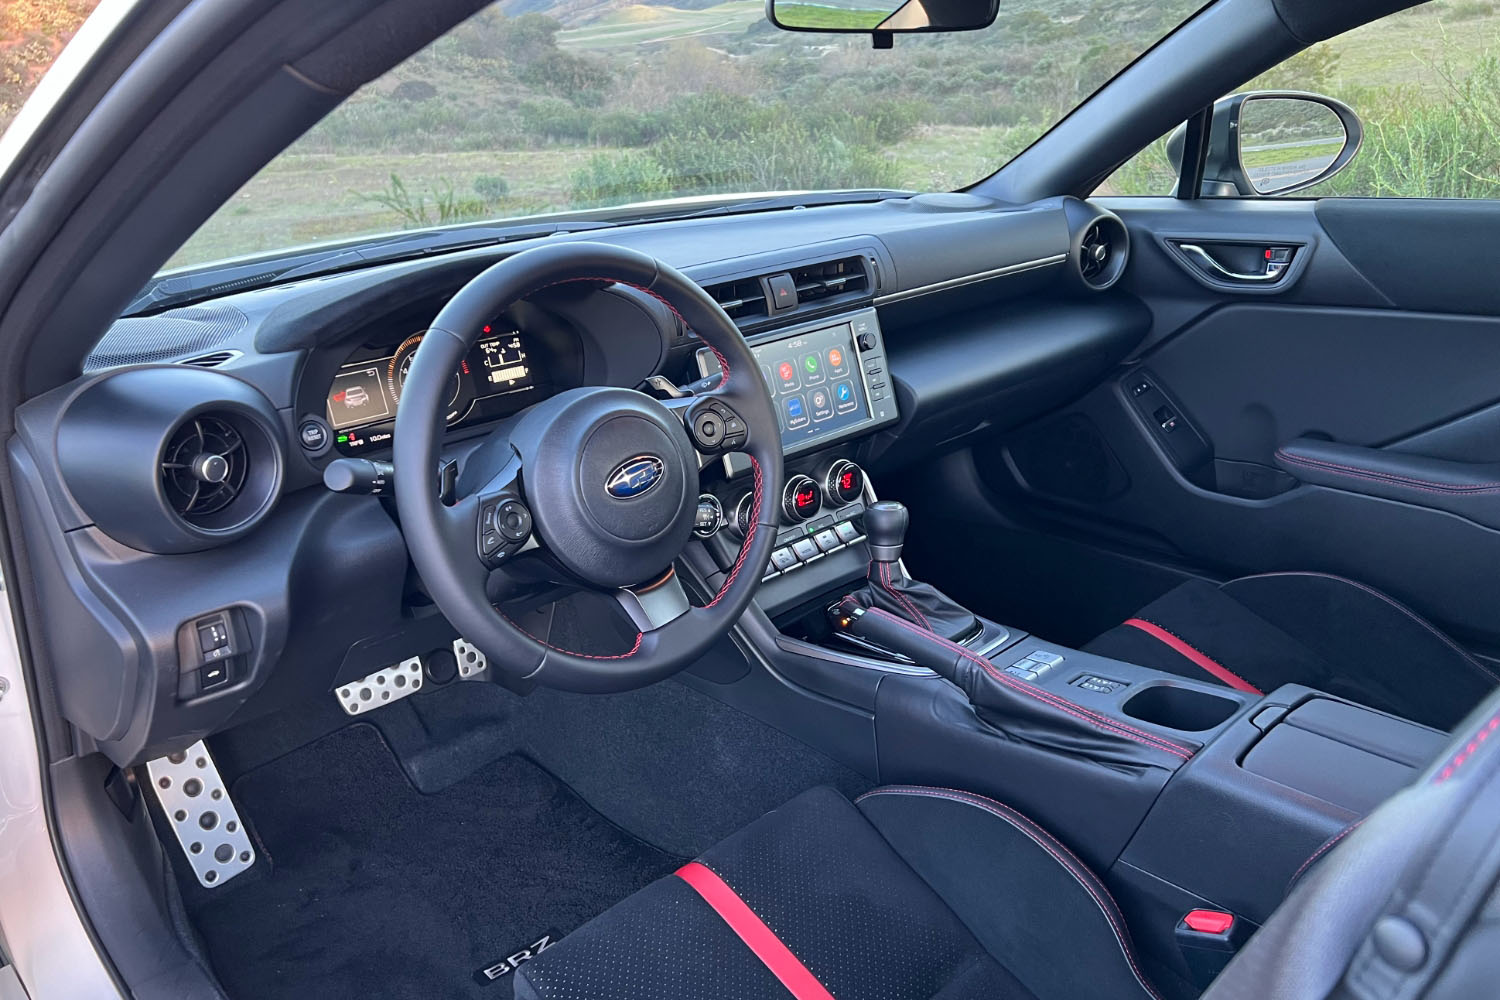 2022 Subaru BRZ interior, dashboard